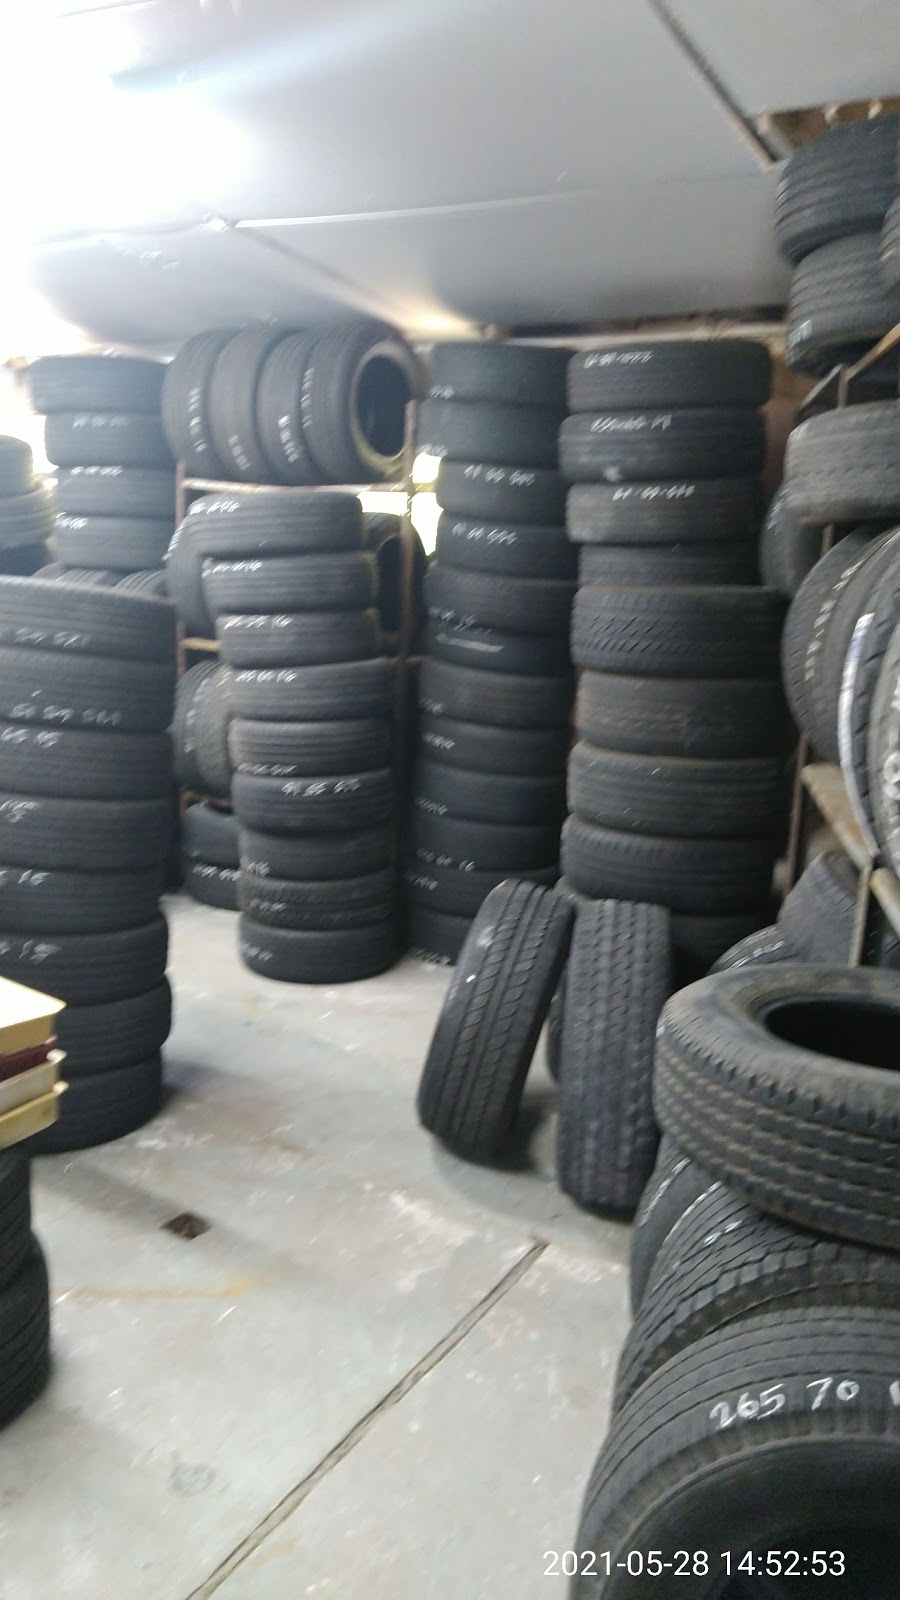 Pit Crew Tire Shop LLC | 9740 US-19, Port Richey, FL 34668, USA | Phone: (727) 378-4066